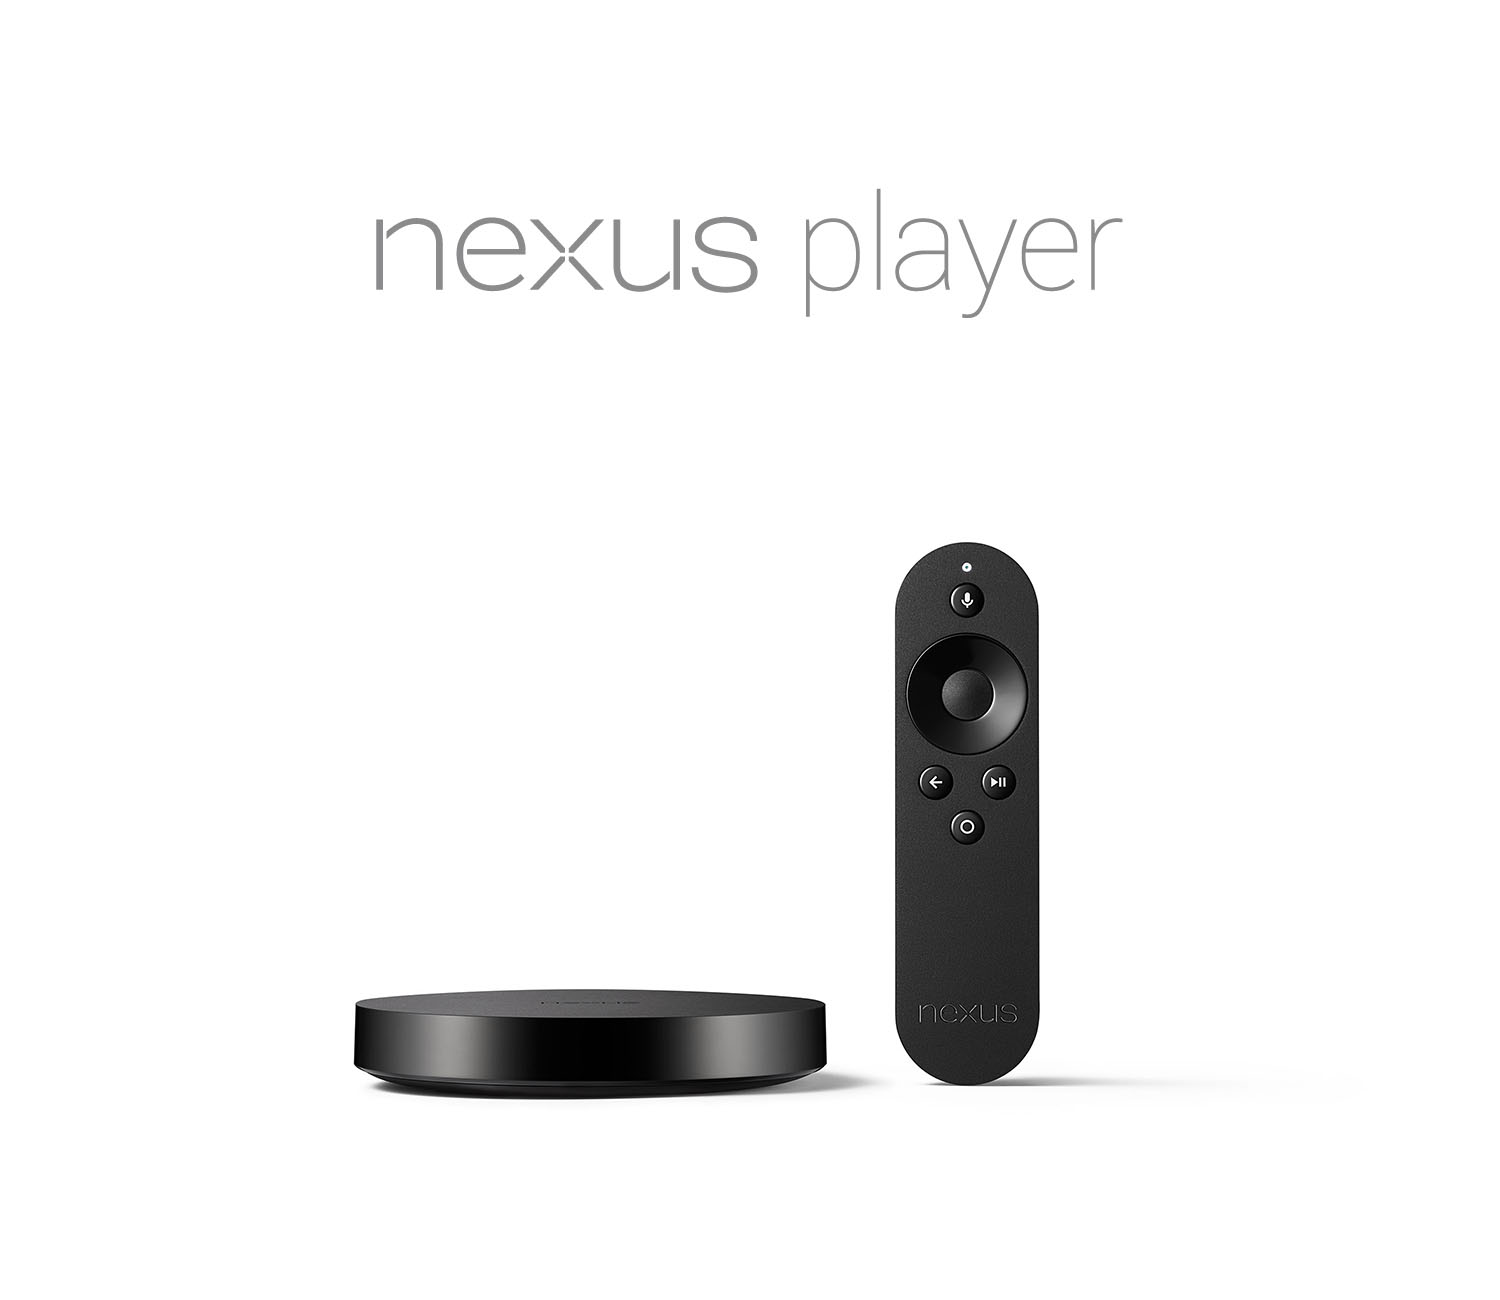 nexus player image shot.jpg